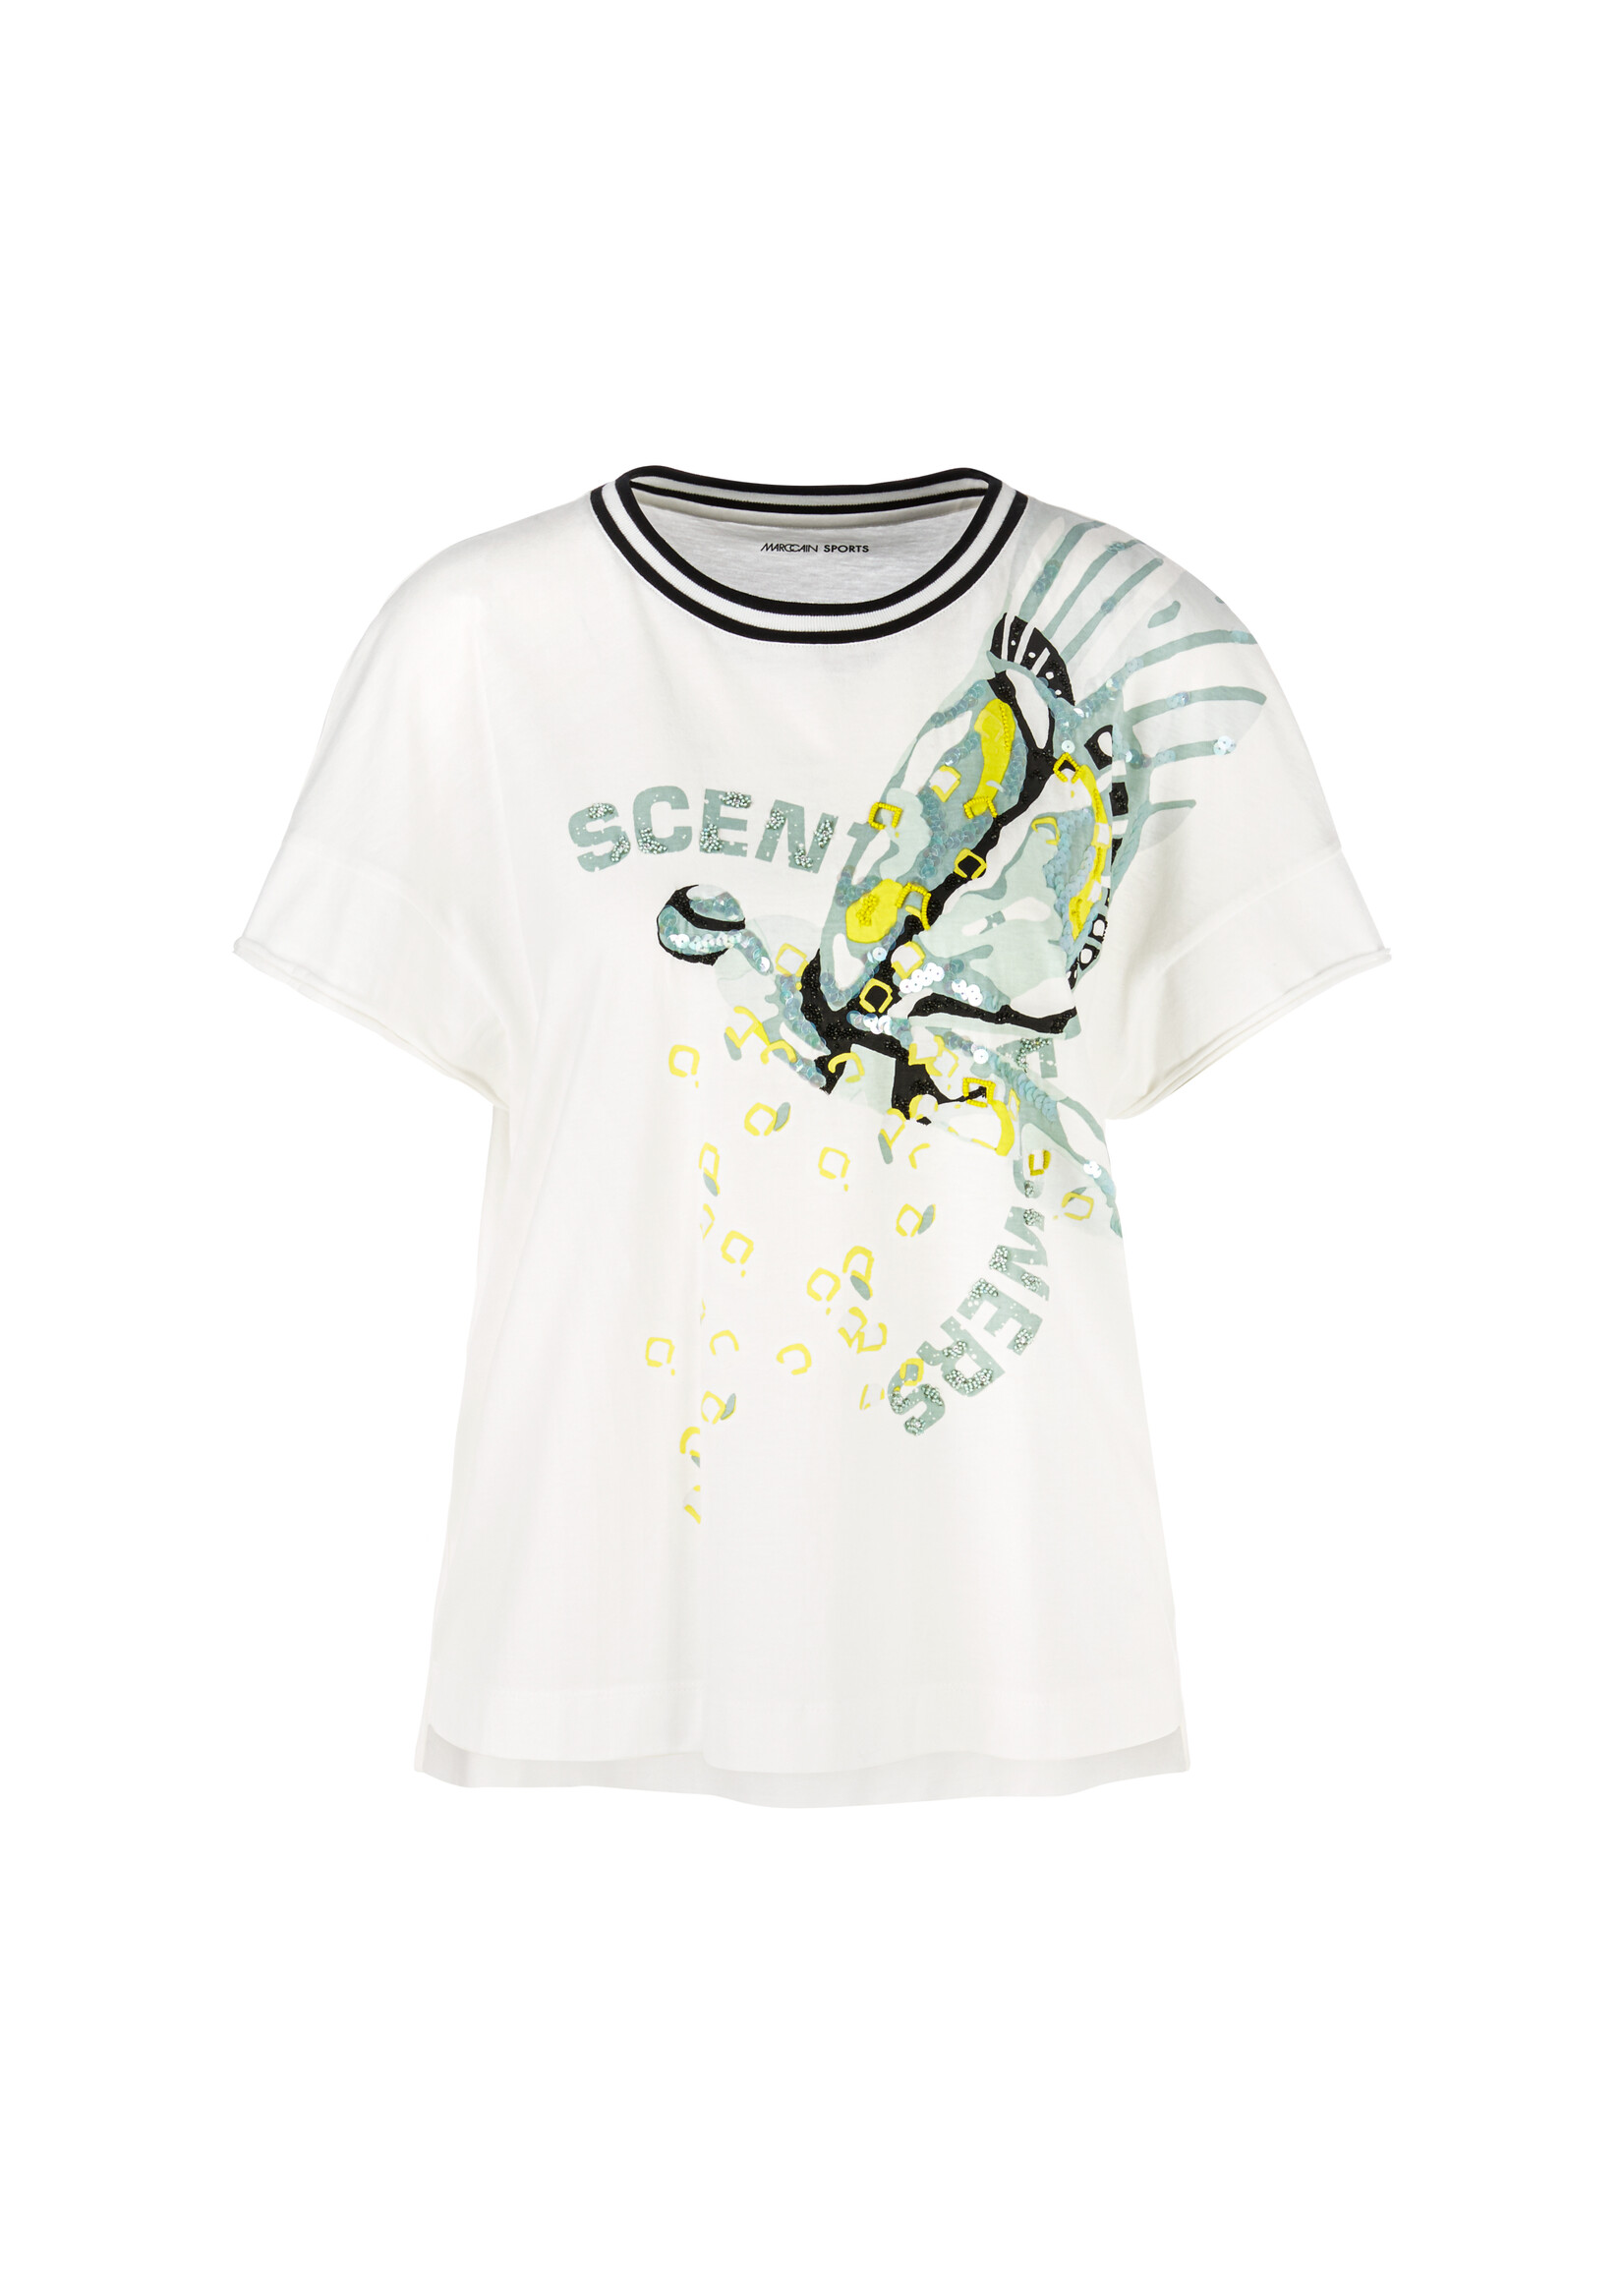 Marccain Sports T-shirt WS 48.06 J41 110